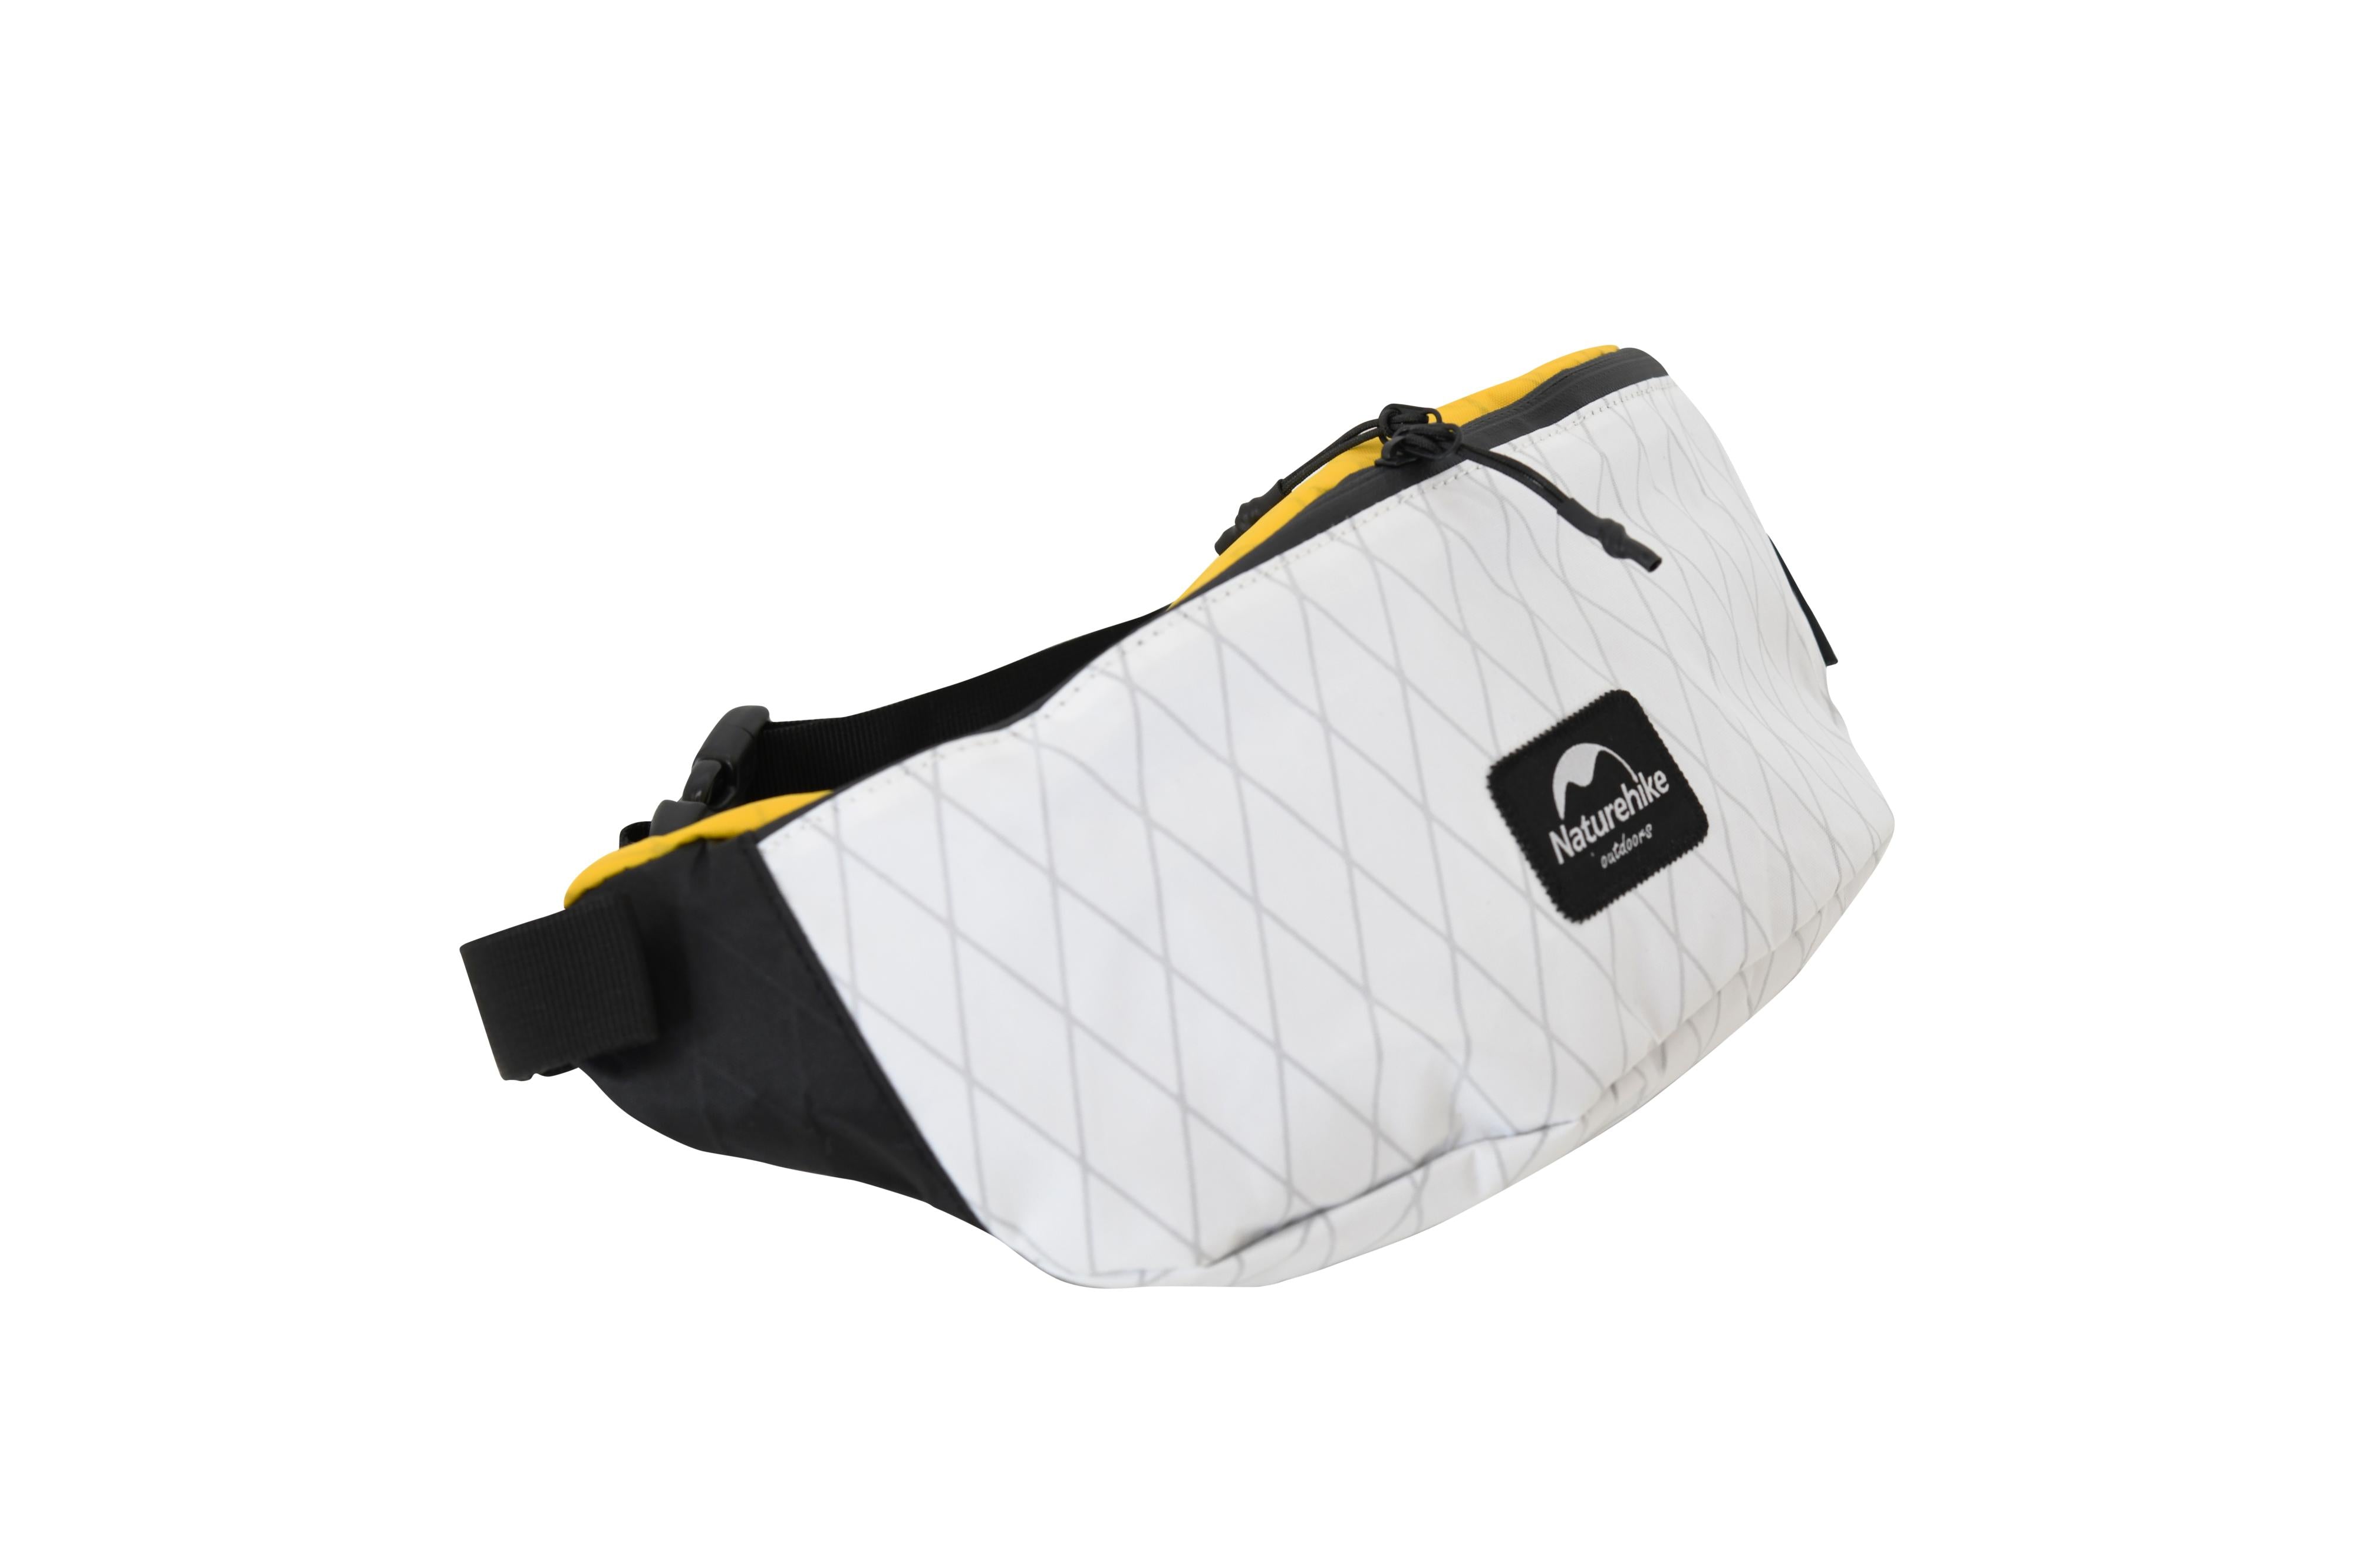 ZT05 XPAC waist bag